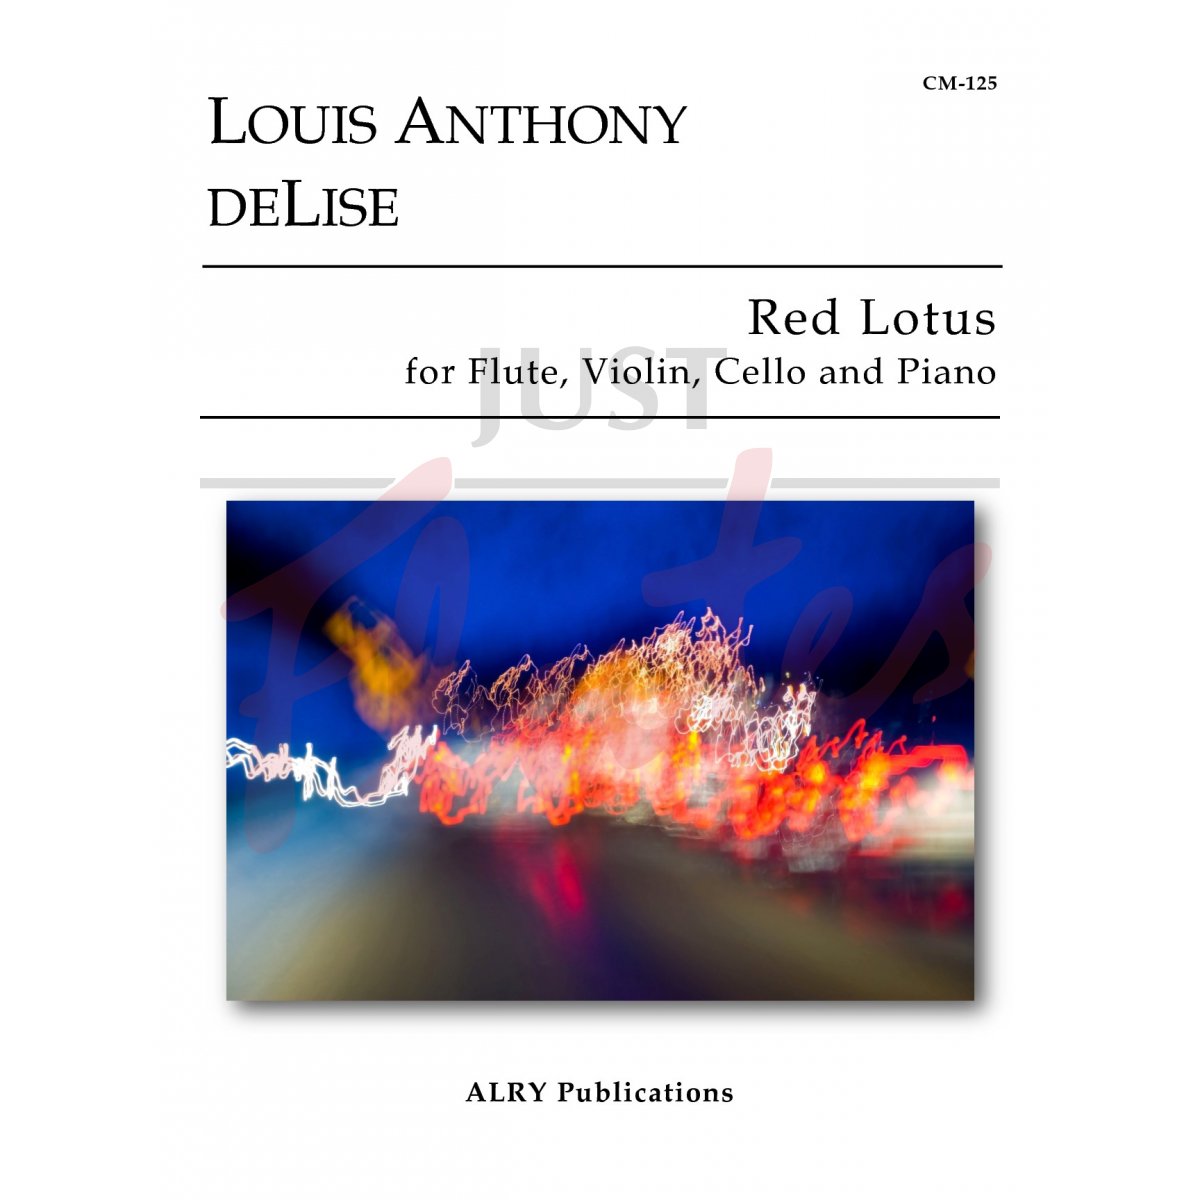 Red Lotus for Flute, Violin, Cello and Piano